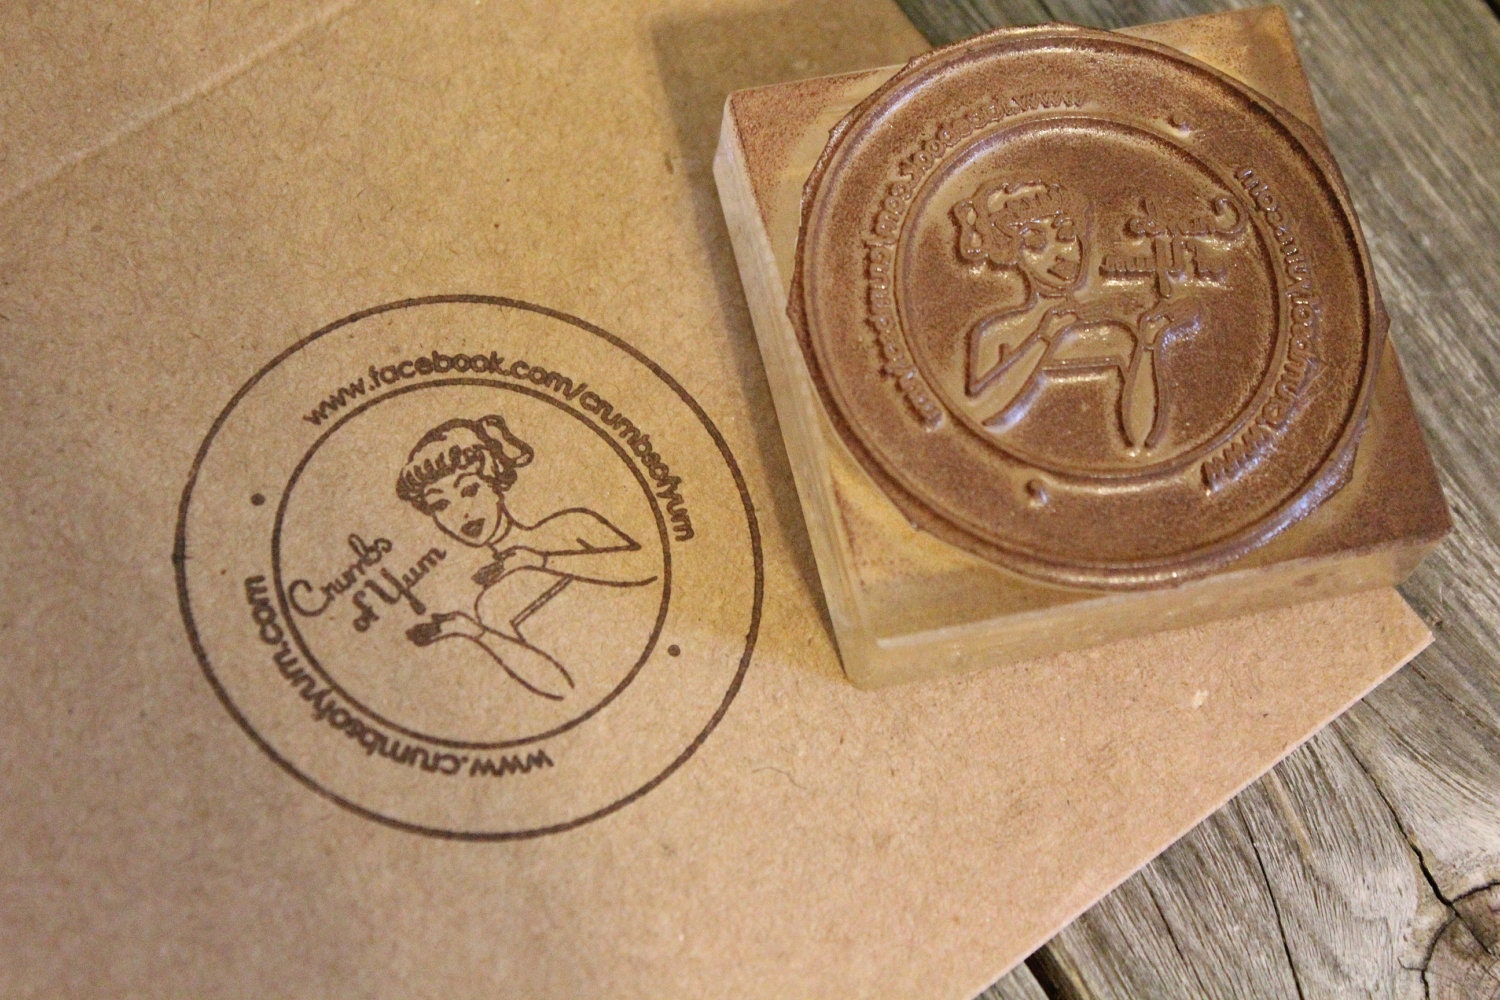 Custom Logo Stamp, Custom Rubber Stamp, Business Logo Stamp, Personalized  Stamp